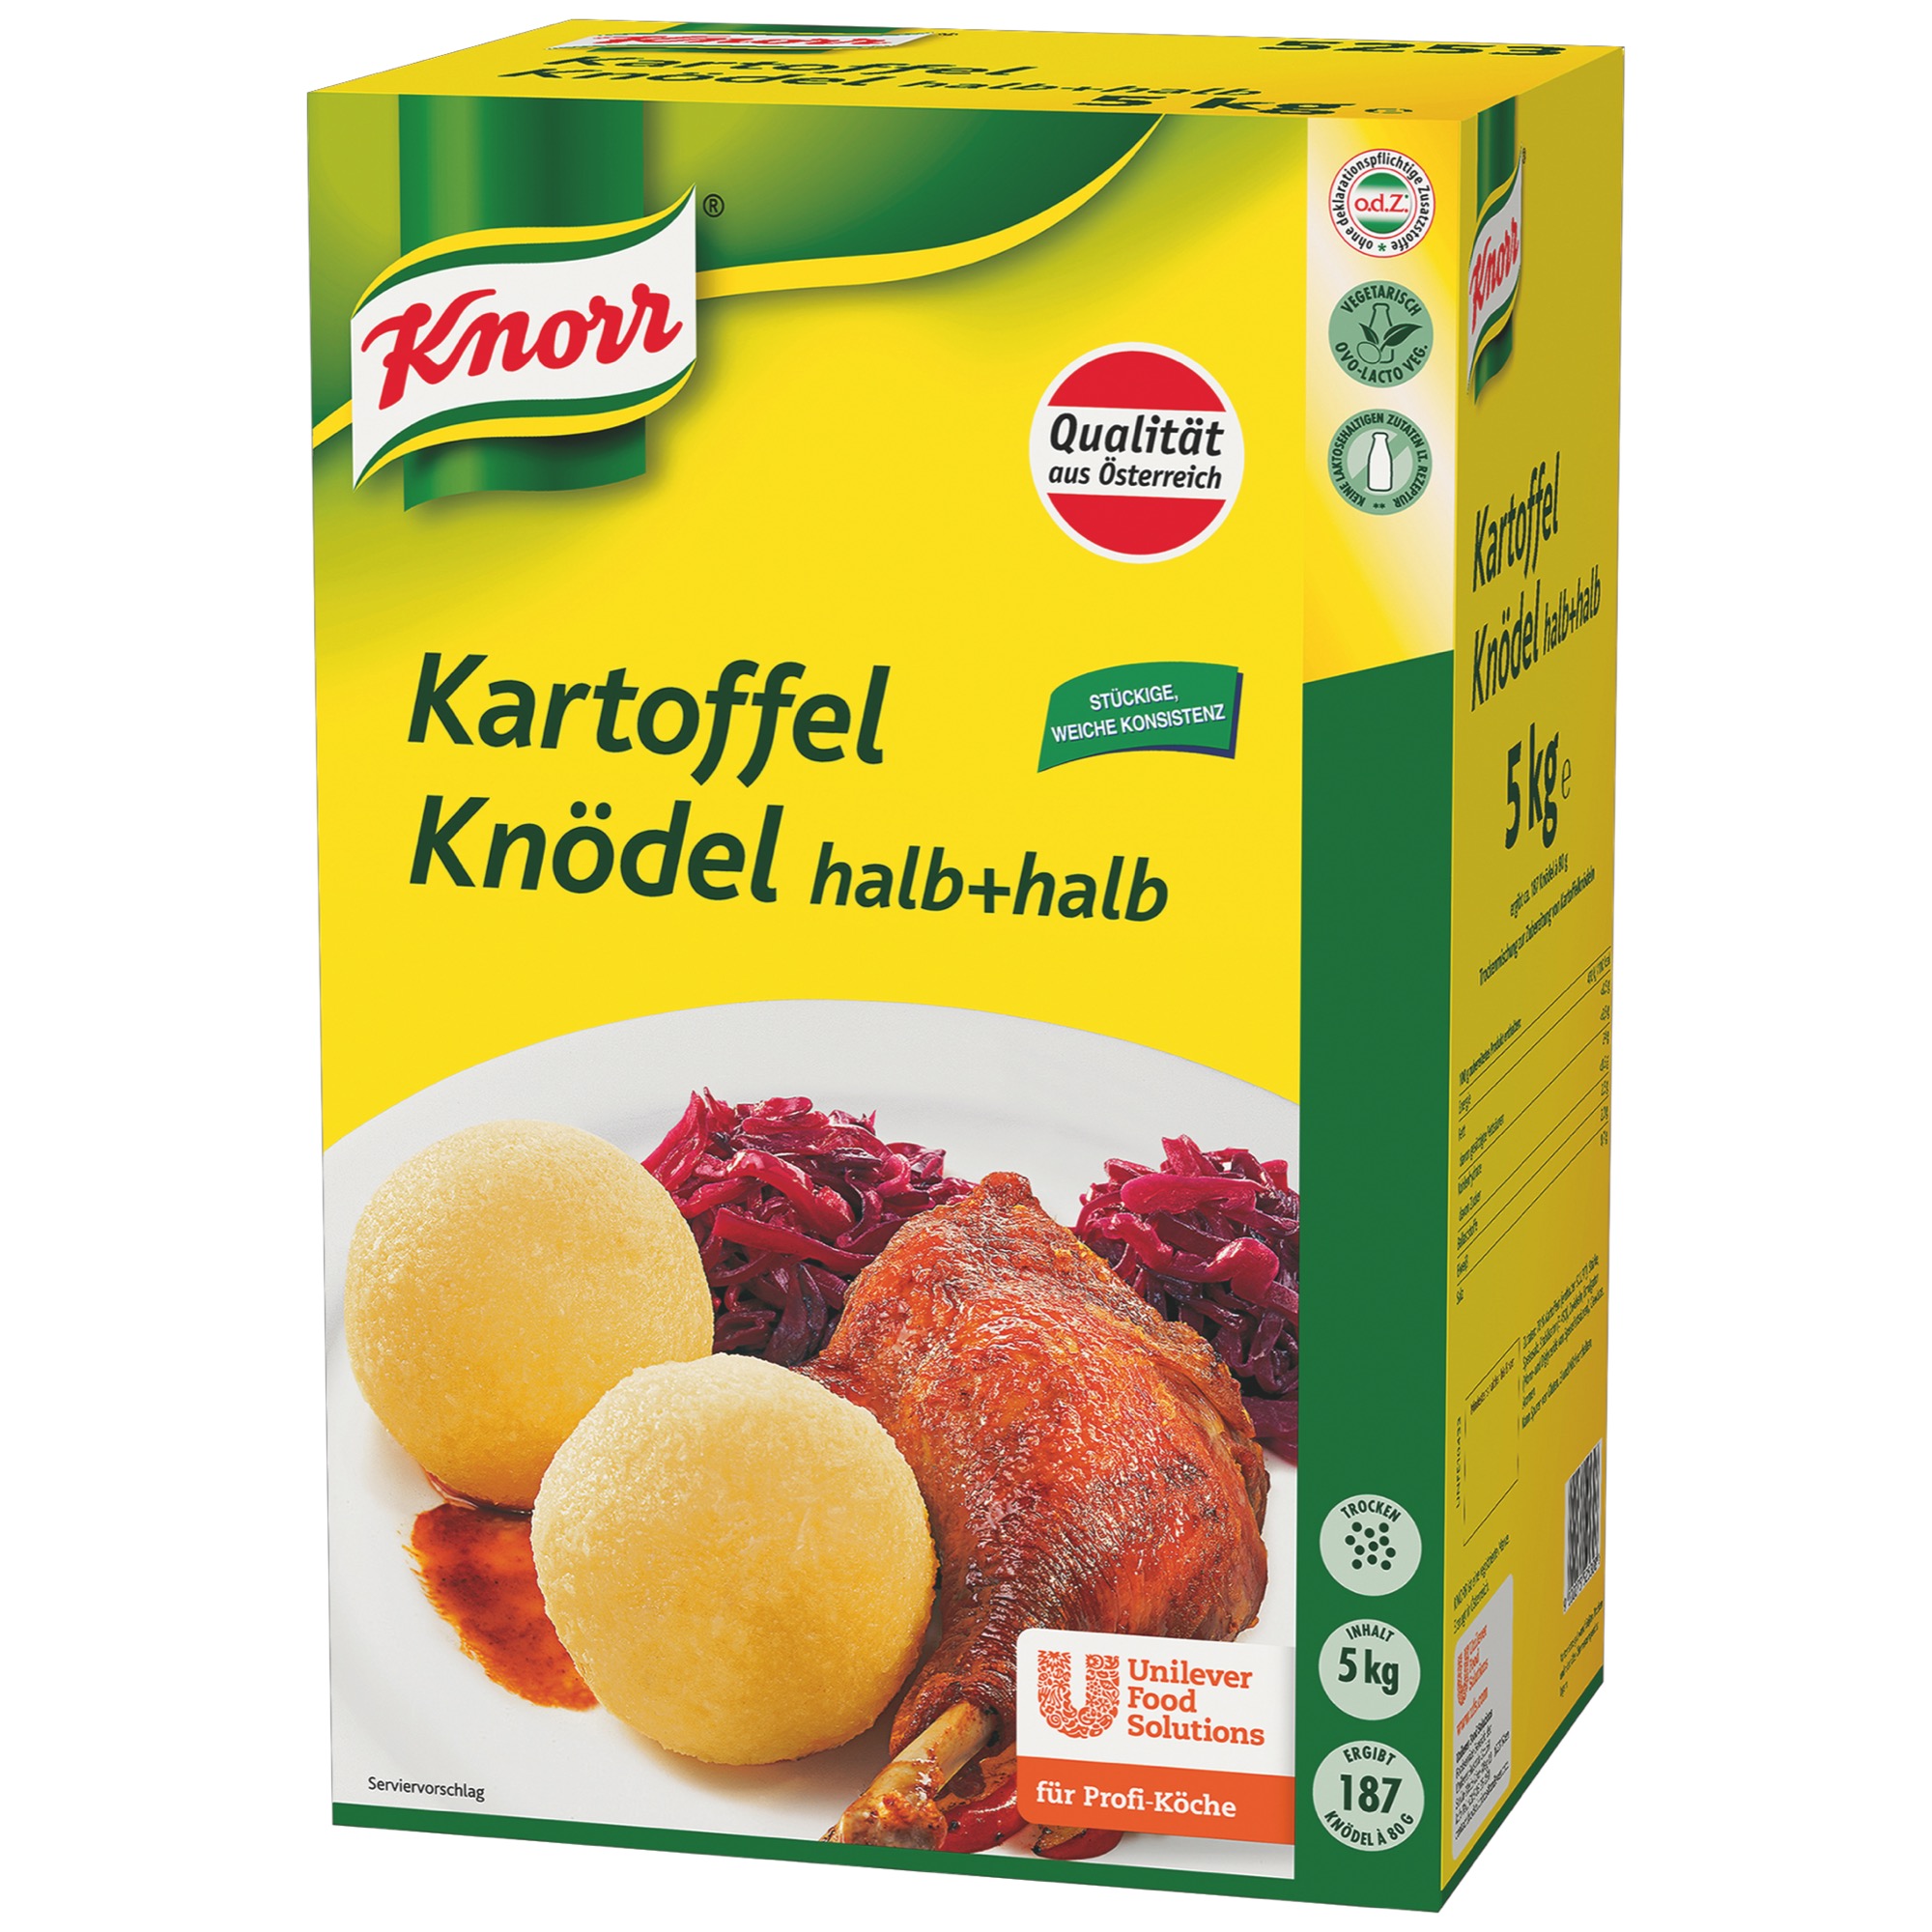 Knorr zemiakové knedle pol/pol 5kg